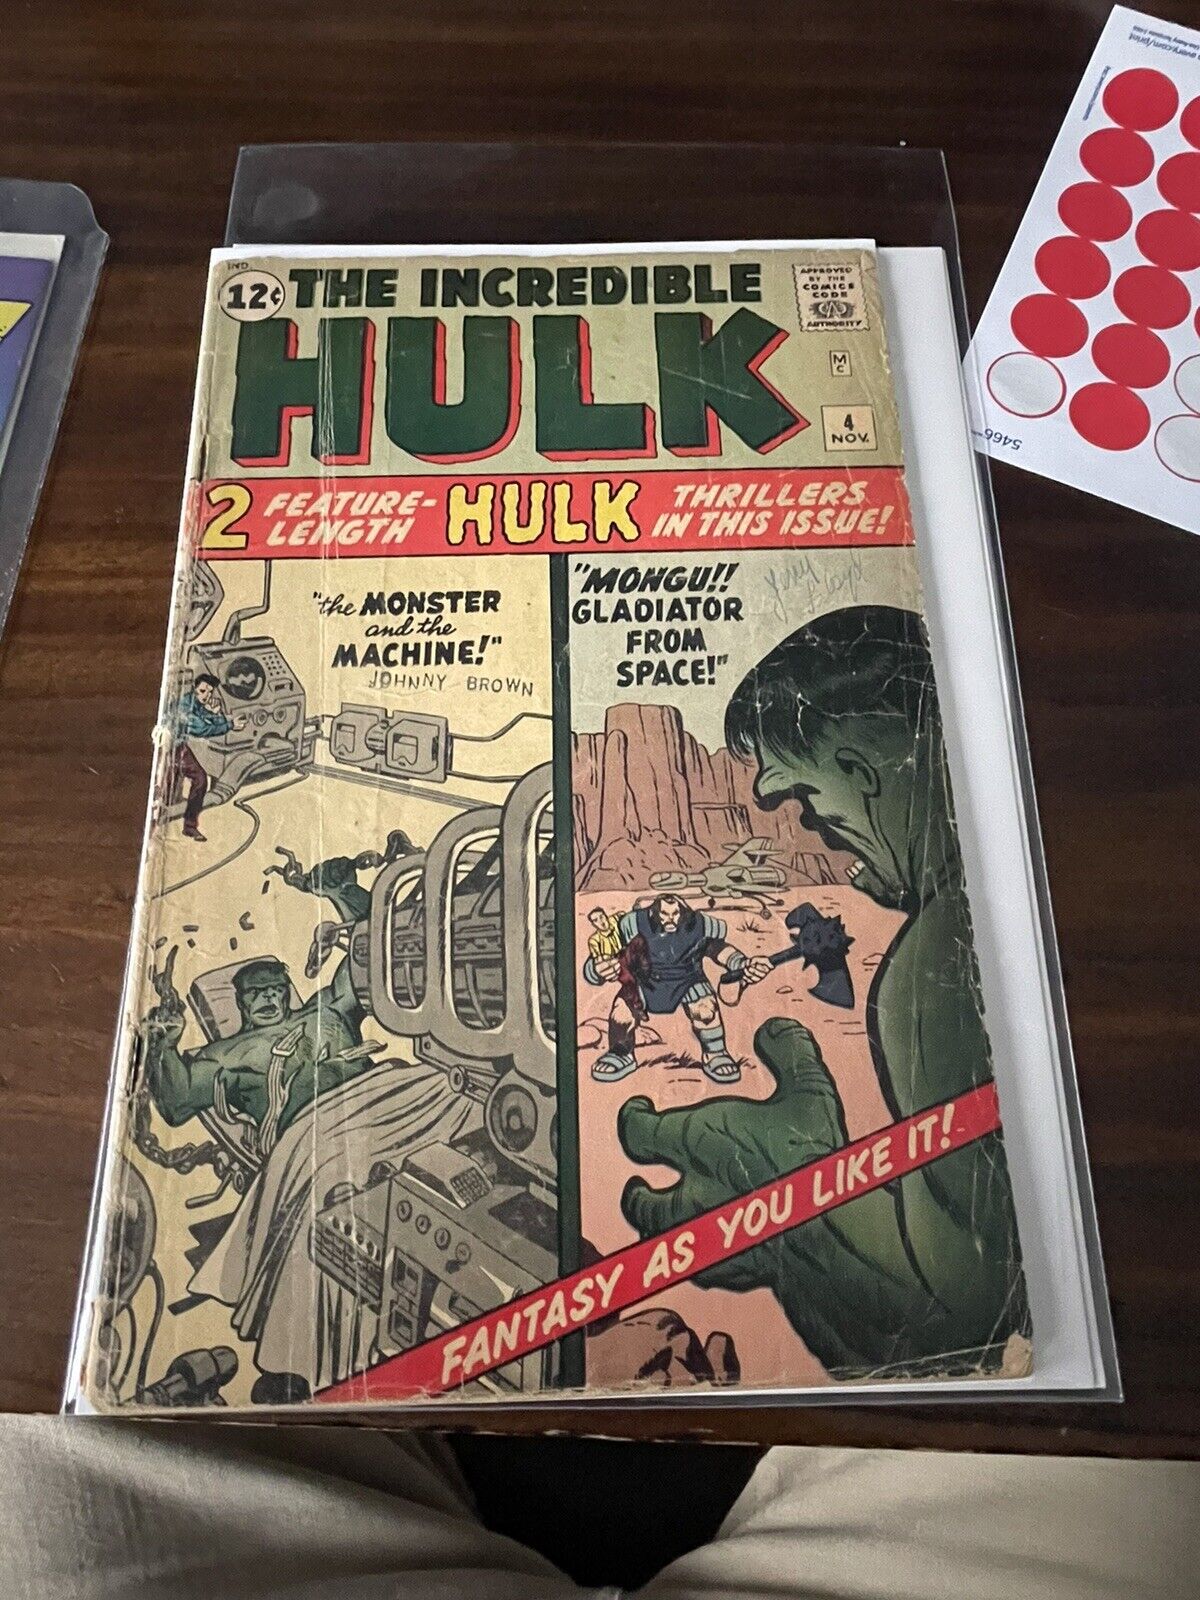 Incredible Hulk #4 Vol. 1 November, 1962